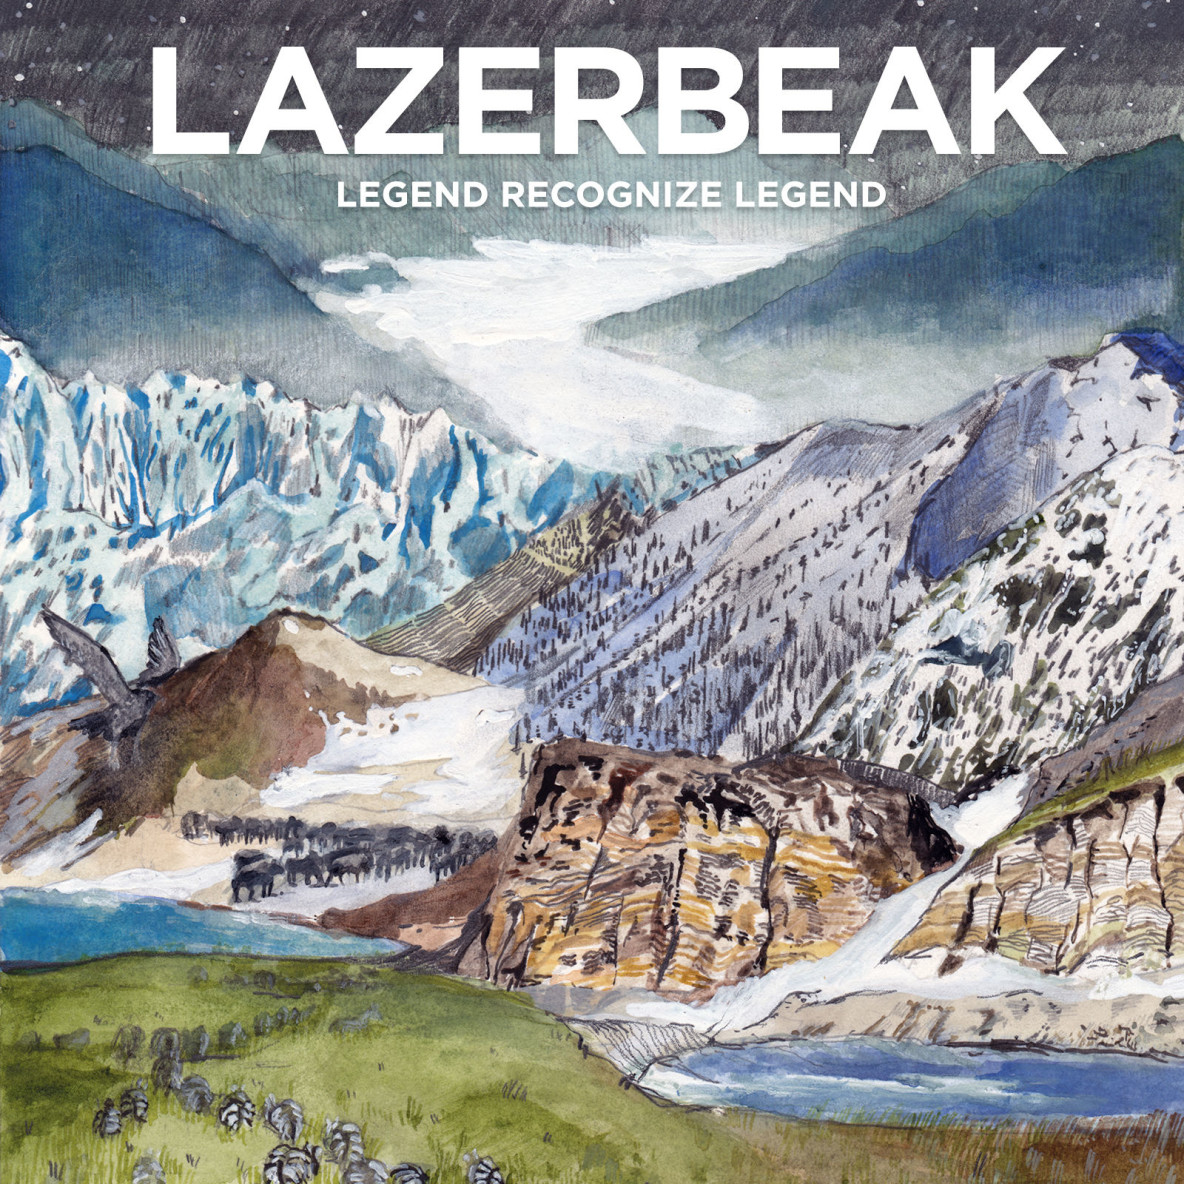 Legend Recognize Legend by Lazerbeak